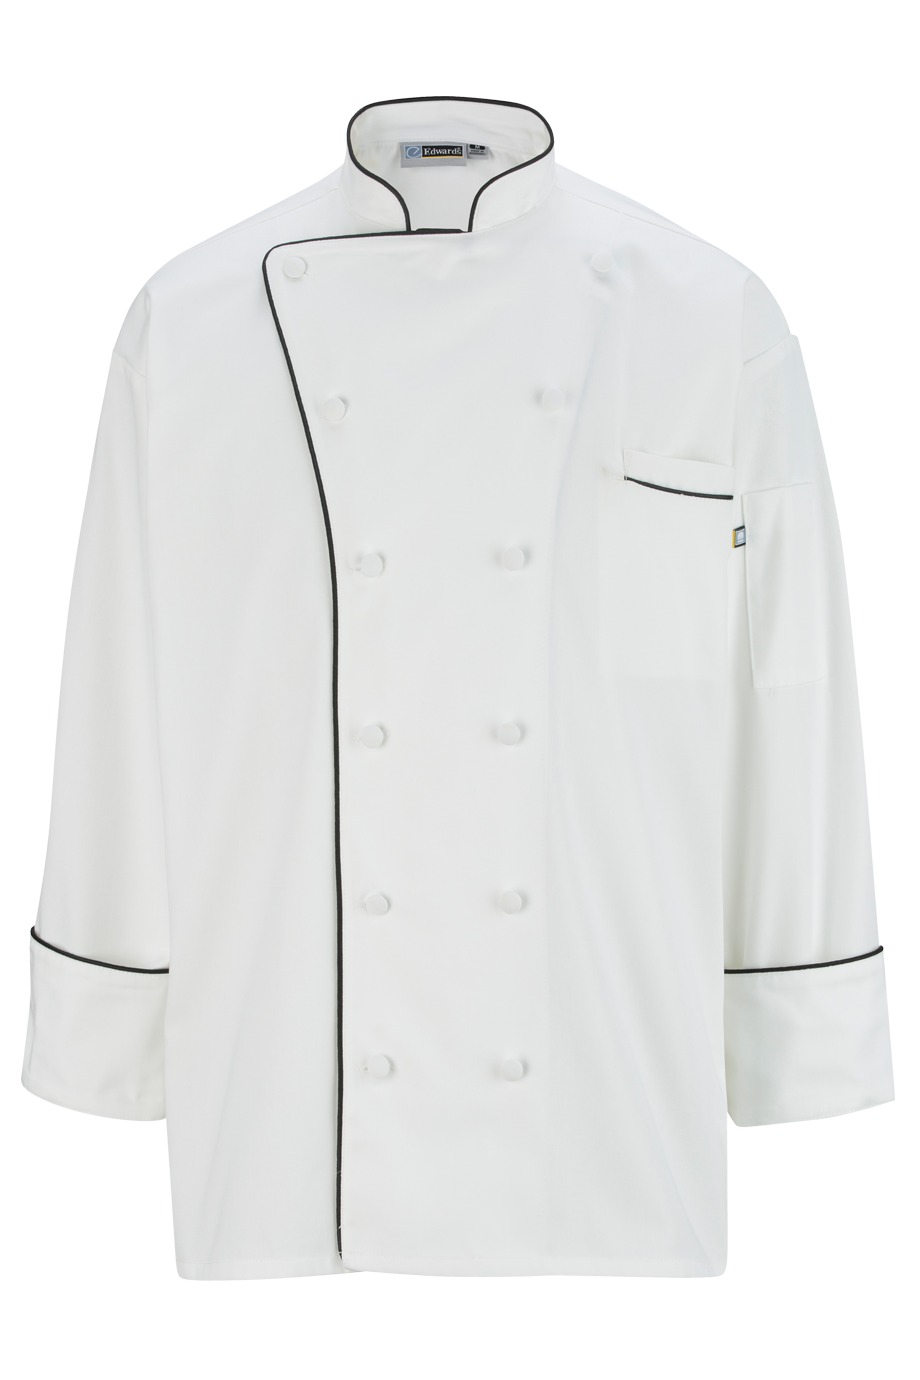 Edwards Garment 3308 - Executive 12 Cloth Button Chef Coat W/Black Trim